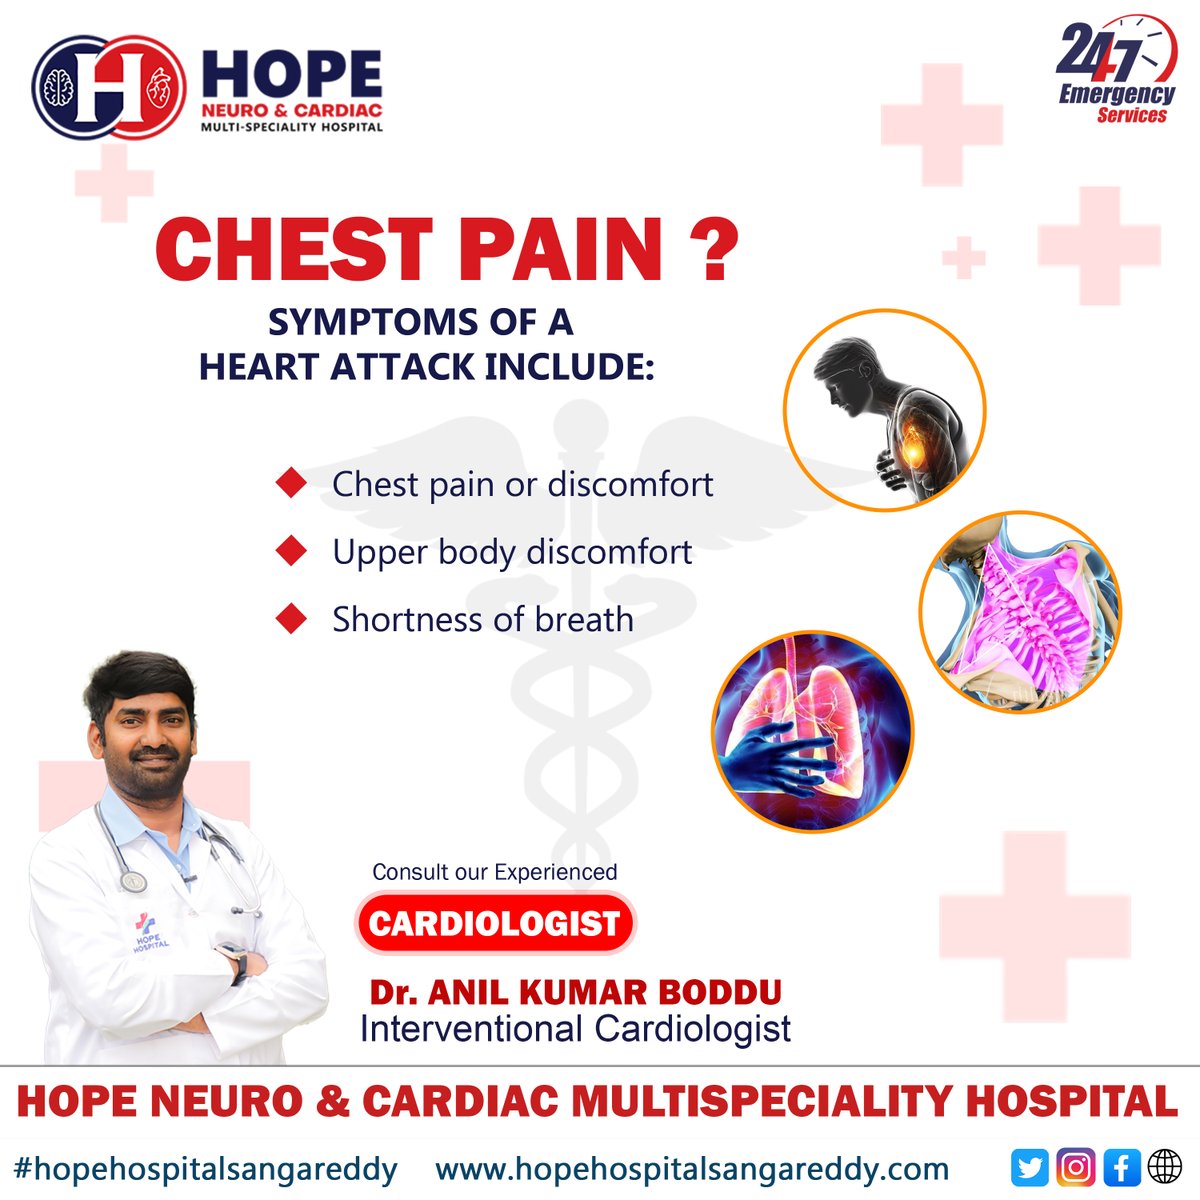 Hope Neuro & Cardiac Multispecialty Hospital Sangareddy
Our Doctor 
Dr. Anil Kumar Boddu
Interventional Cardiologist
Appointment : 8885333053 7729955455 
#HeartHealth
#Cardiology
#HealthyHeart
#heartawareness
#CardiacCare
#heartdisease
#CardioVascularHealth
#hearthealthy